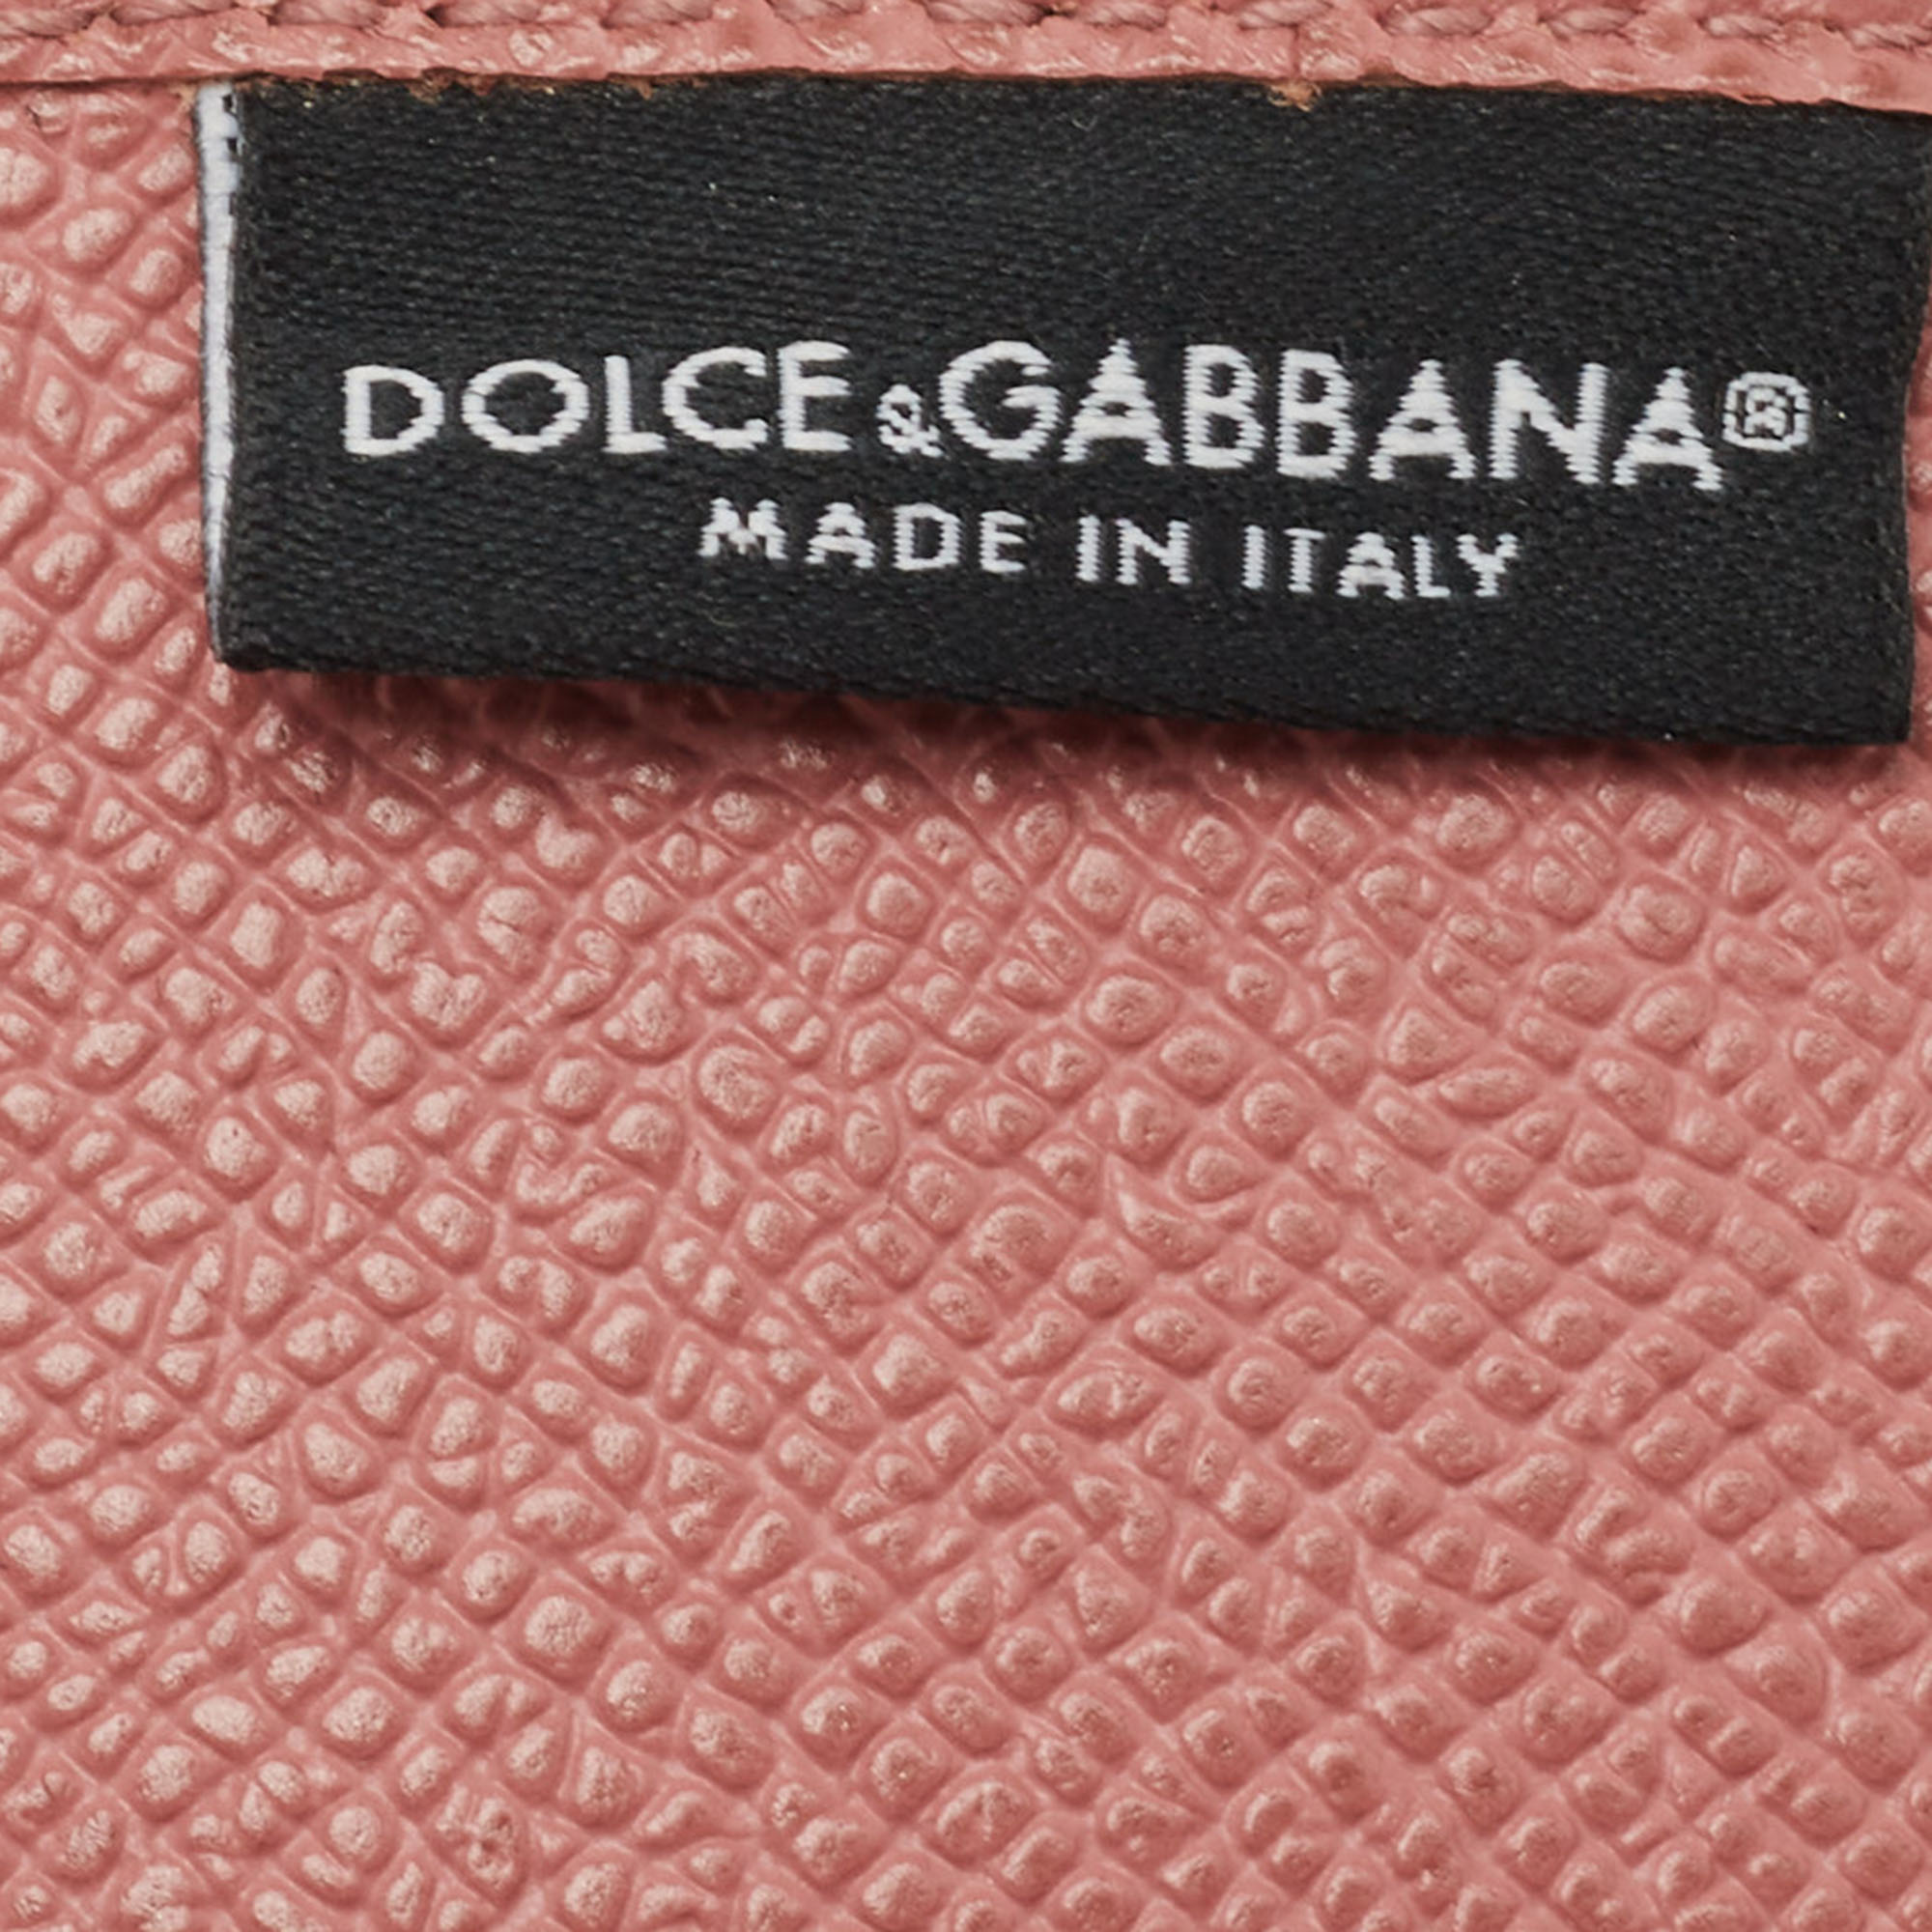 Dolce & Gabbana Old Rose Leather Passport Holder